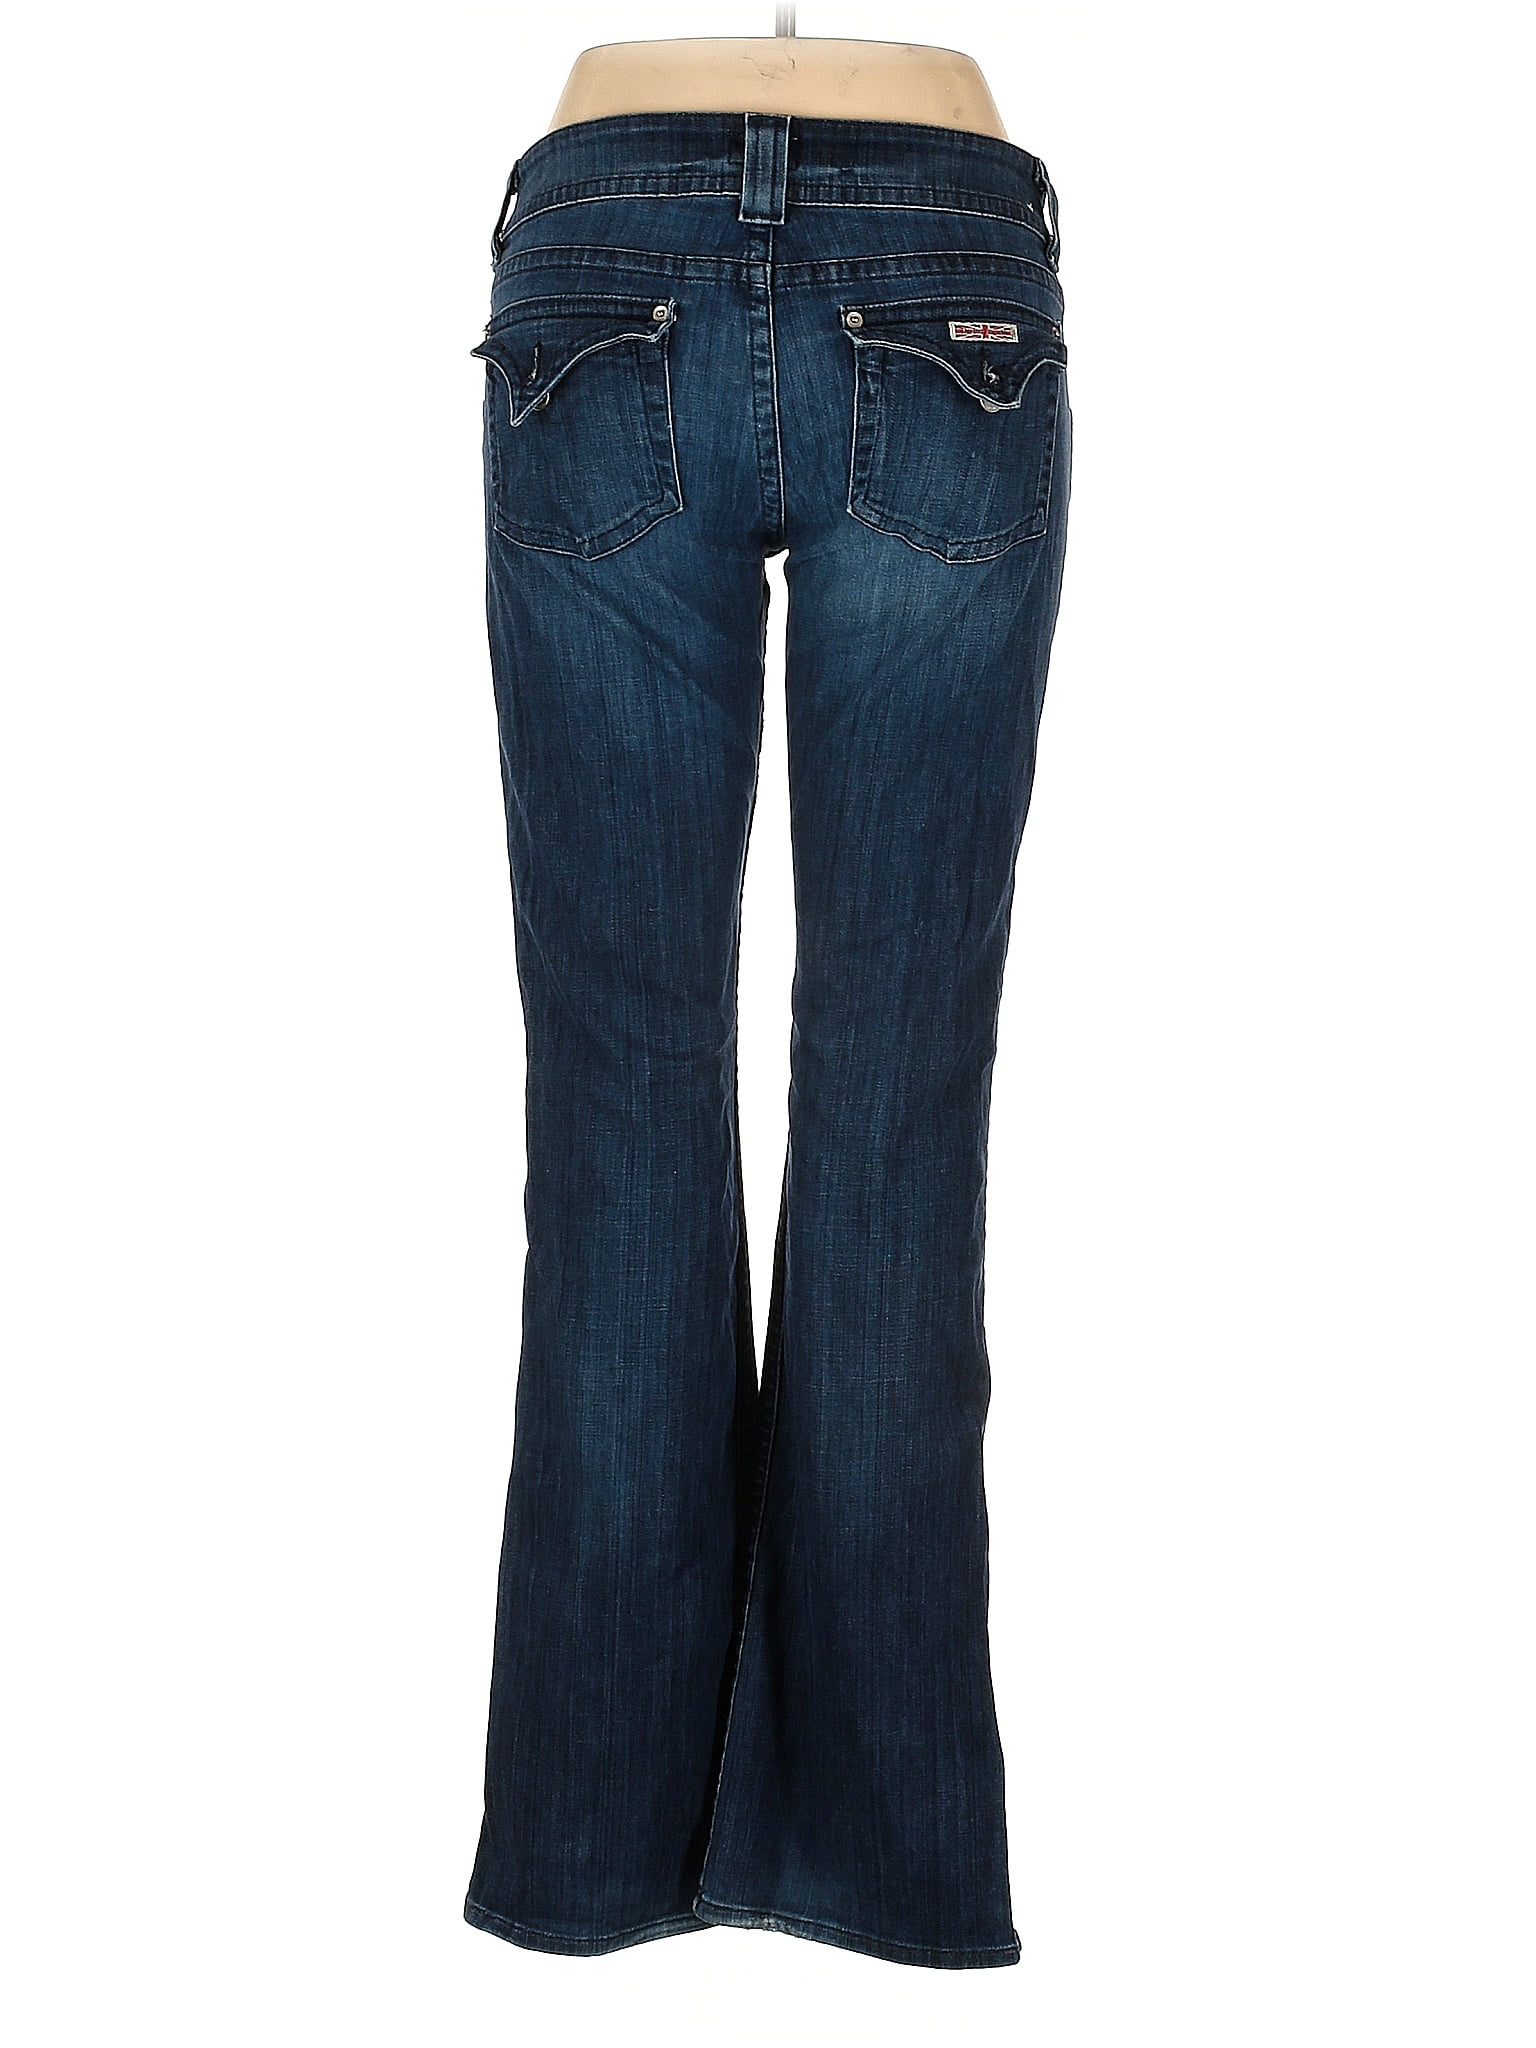 Jeans Blue Jeans 32 Waist - 86% off | thredUP